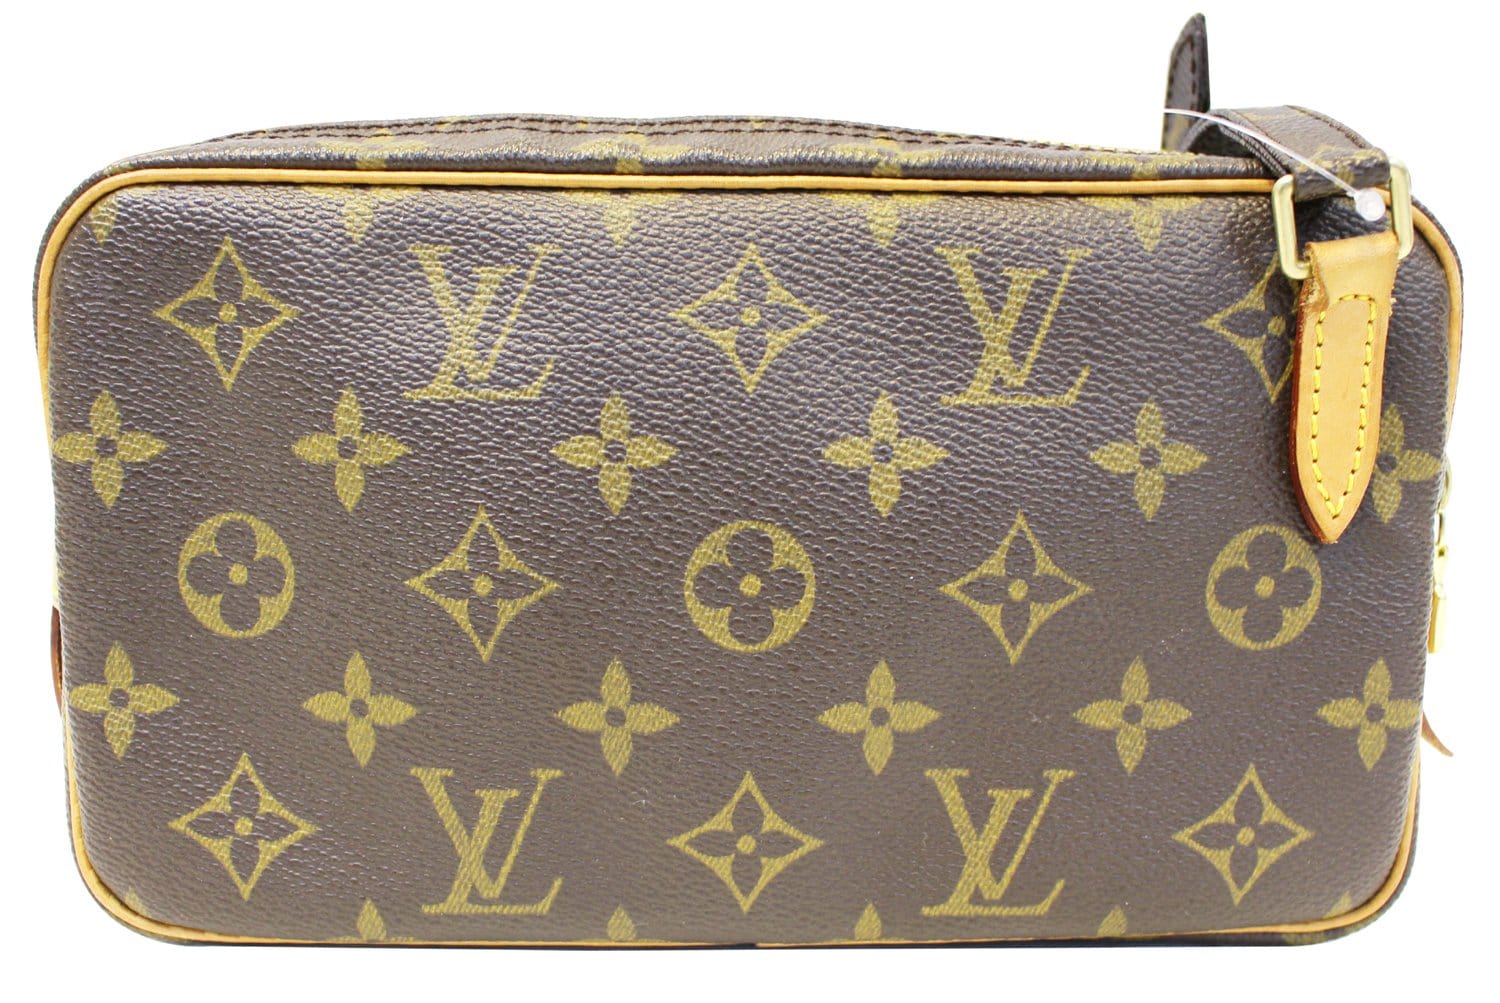 Vuitton - M51510 – Louis Vuitton 2004 pre - owned Marly crossbody bag Braun  - Pochette - Shoulder - Monogram - Croissant - Bag - billetera louis vuitton  sarah en lona a cuadros revestida ebano y cuero marron - Louis